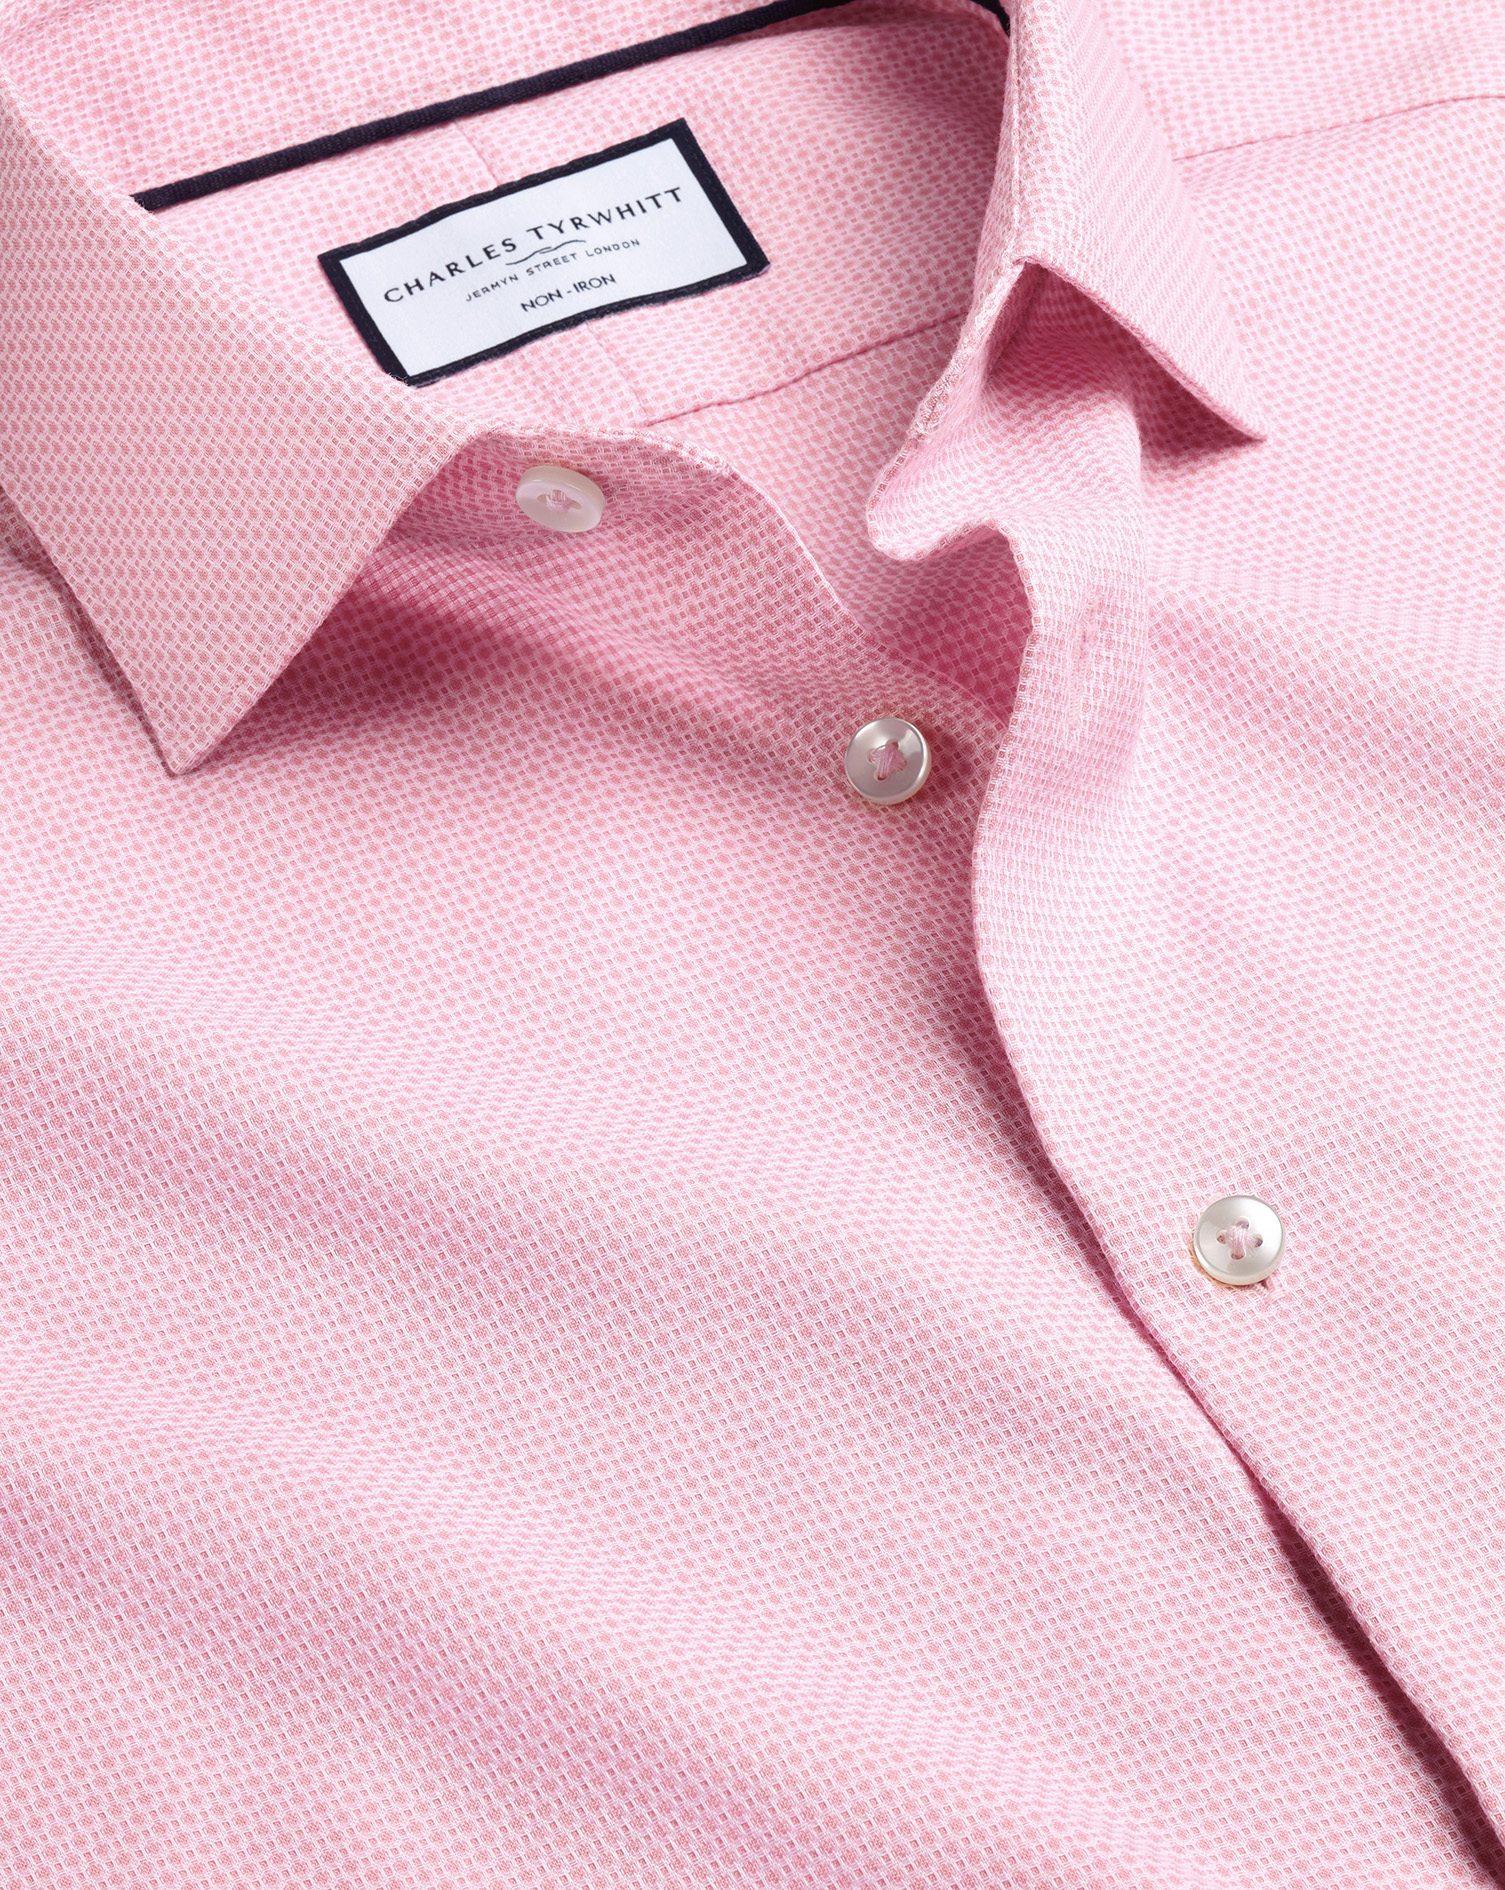 Men's Charles Tyrwhitt Non-Iron Stretch Texture Oval Dress Shirt - Pink Single Cuff Size 16.5/33 Cot